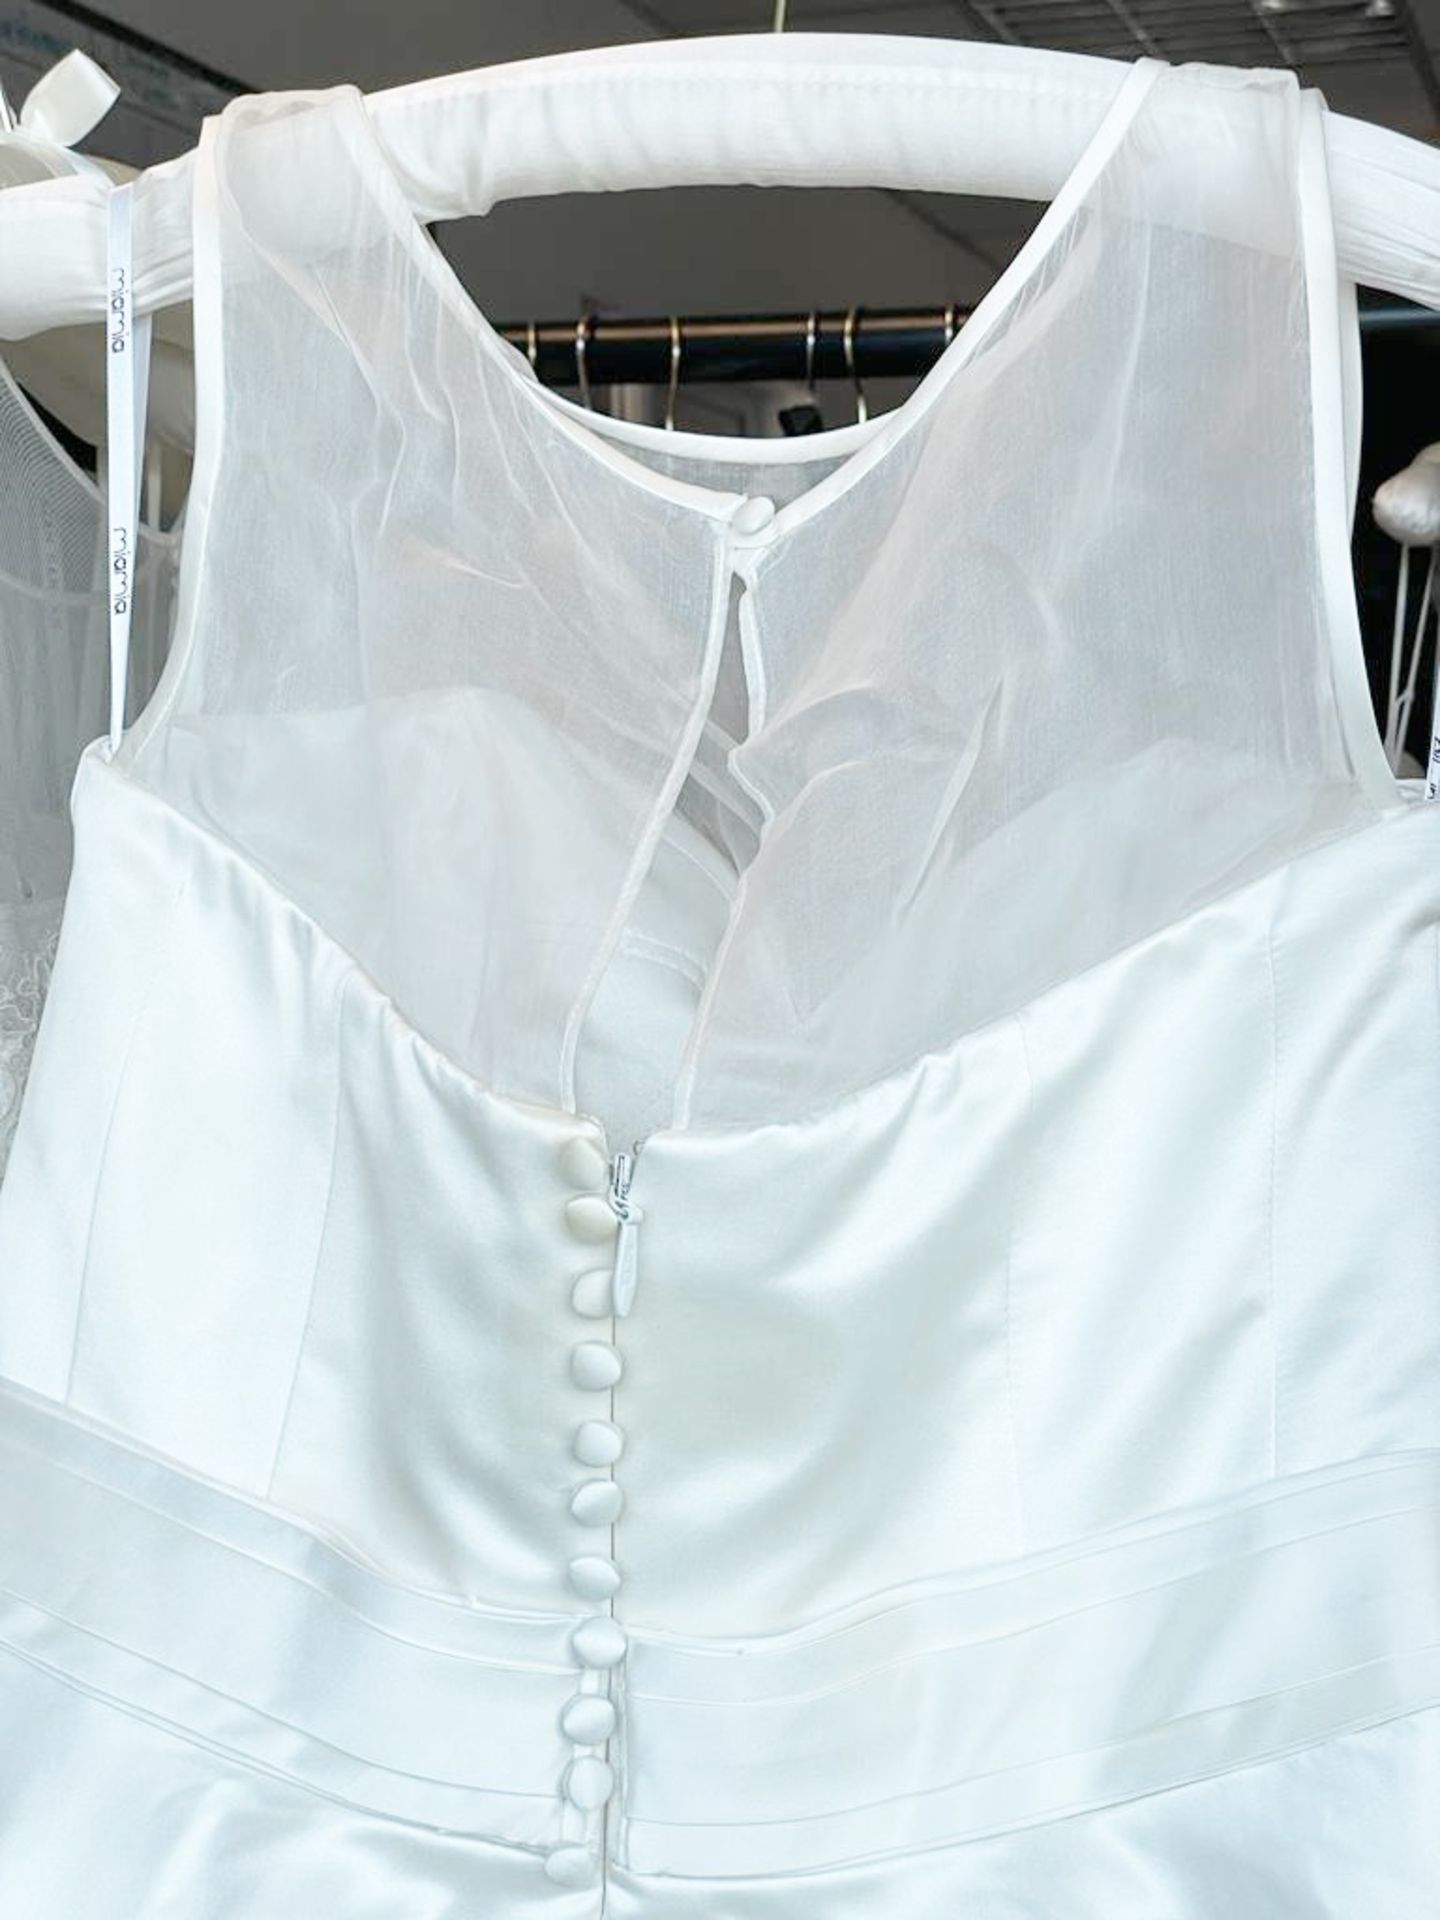 1 x MIA-MIA 'Tamara' Designer Wedding Dress Bridal Gown, With Illusion Neckline, Boned Corset And - Image 5 of 16